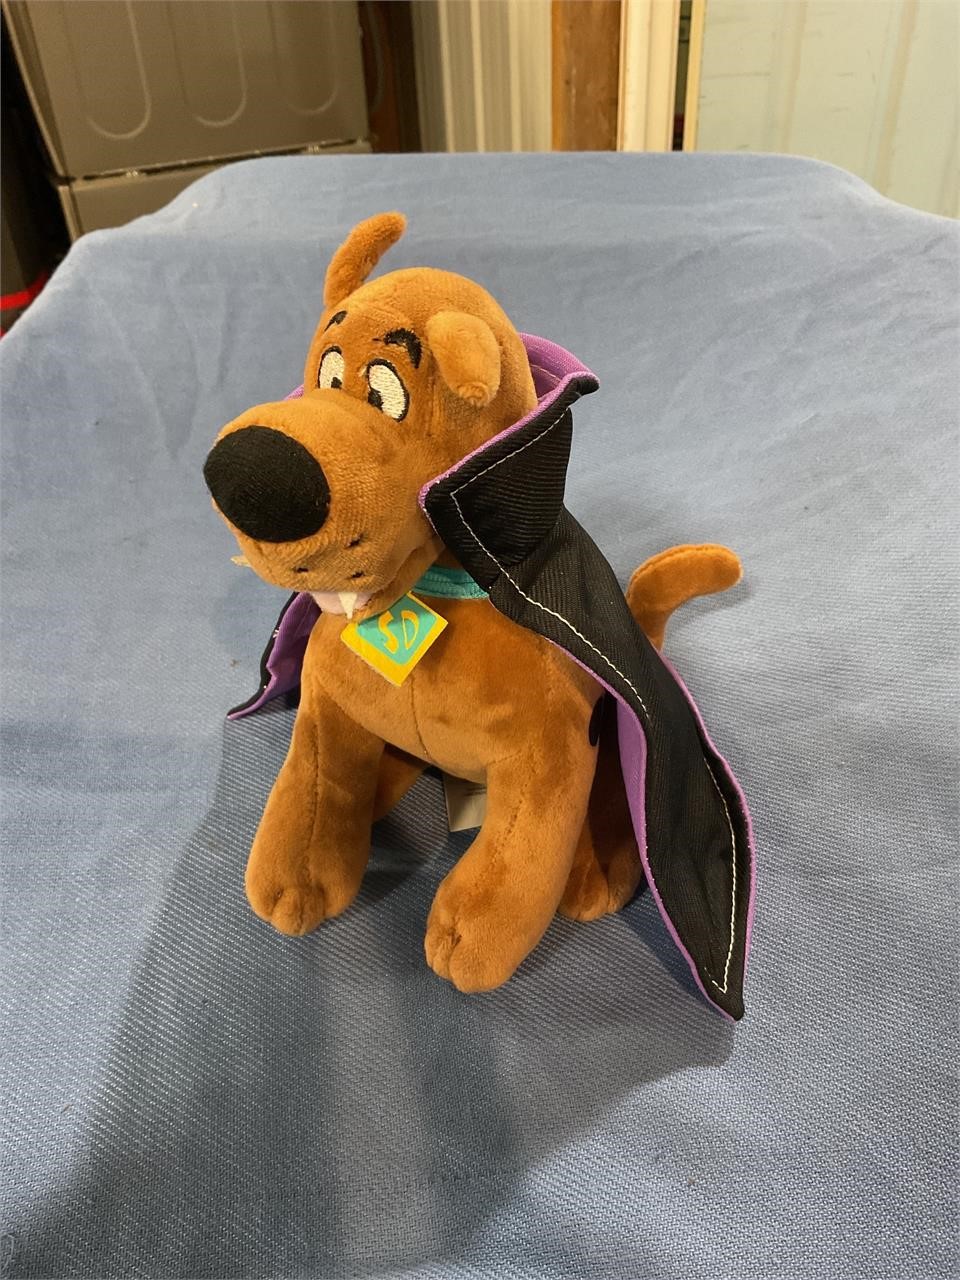 Scooby Doo stuffed animal 8” tall